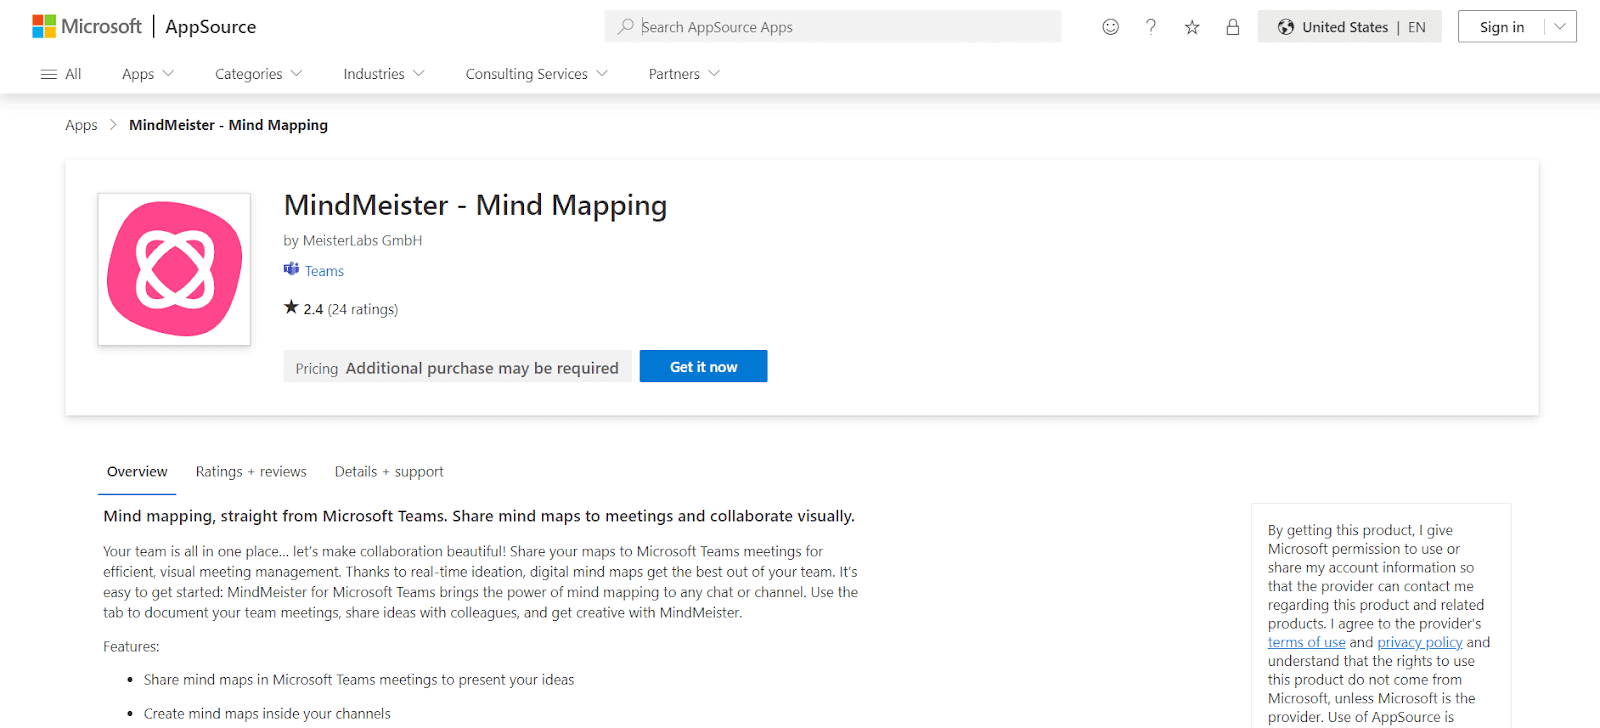 MindMеistеr - Mind Mapping